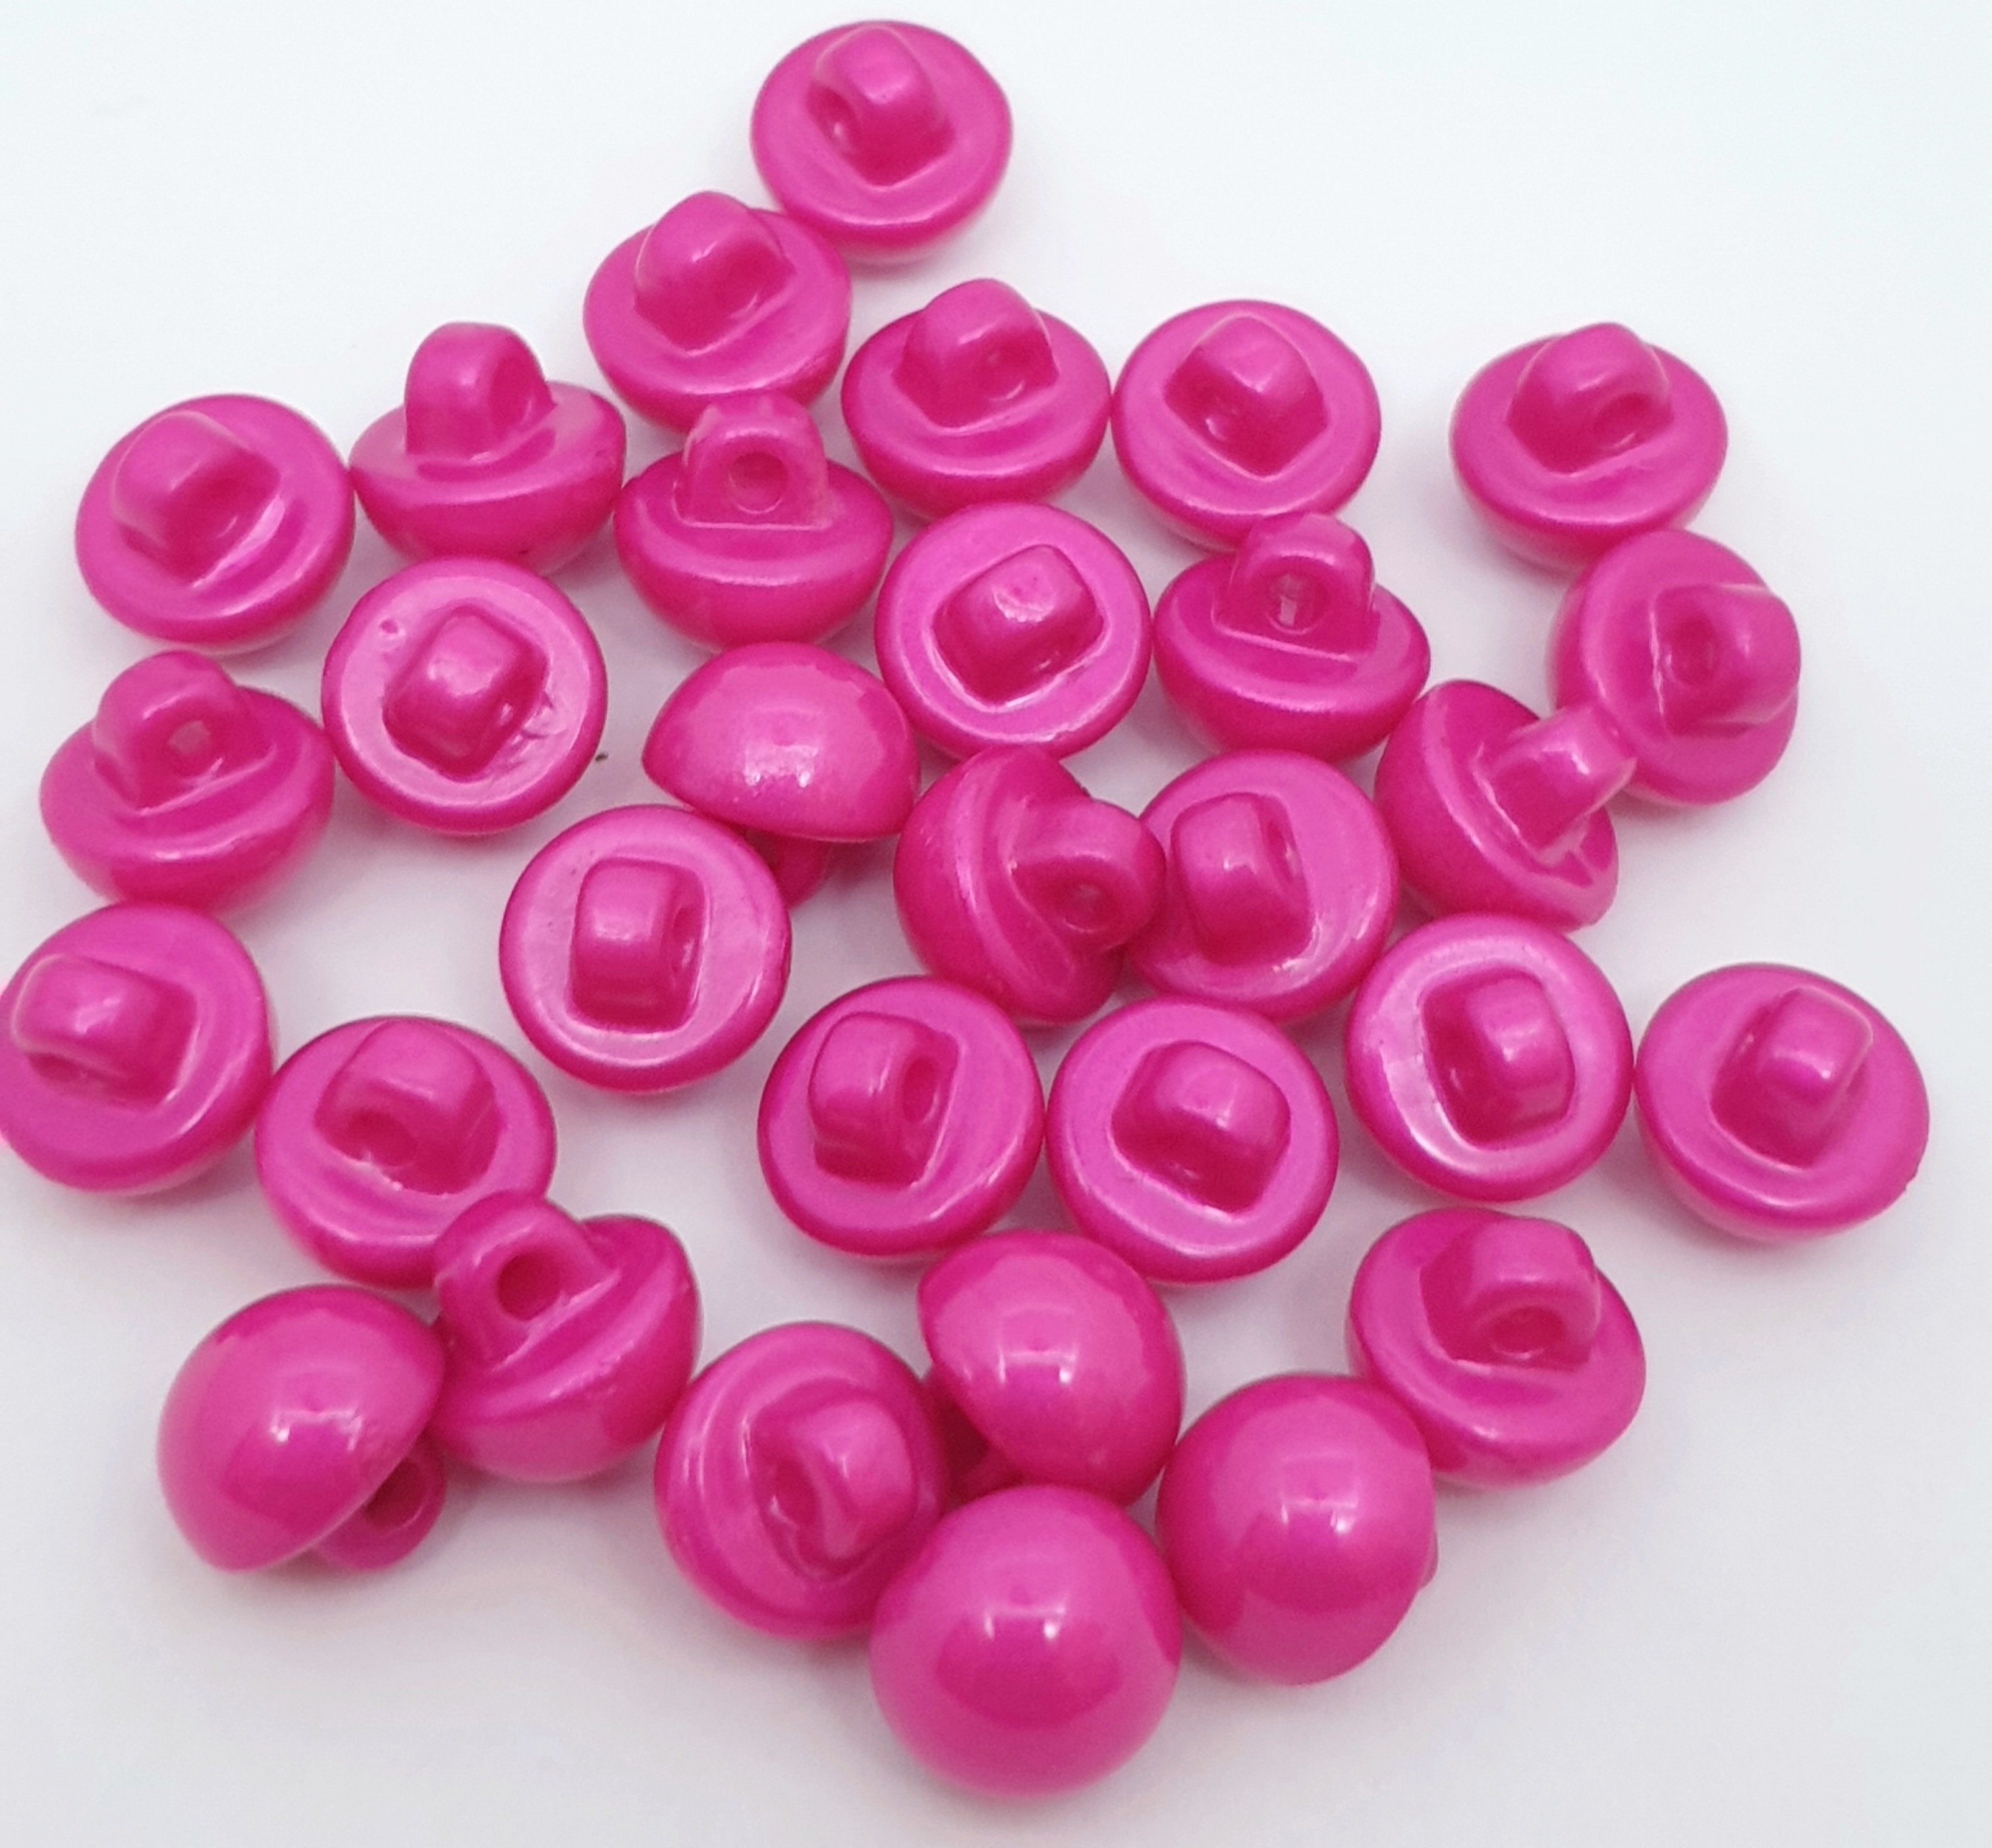 MajorCrafts 30pcs 10mm Dark Pink High-Grade Acrylic Small Round Sewing Mushroom Shank Buttons